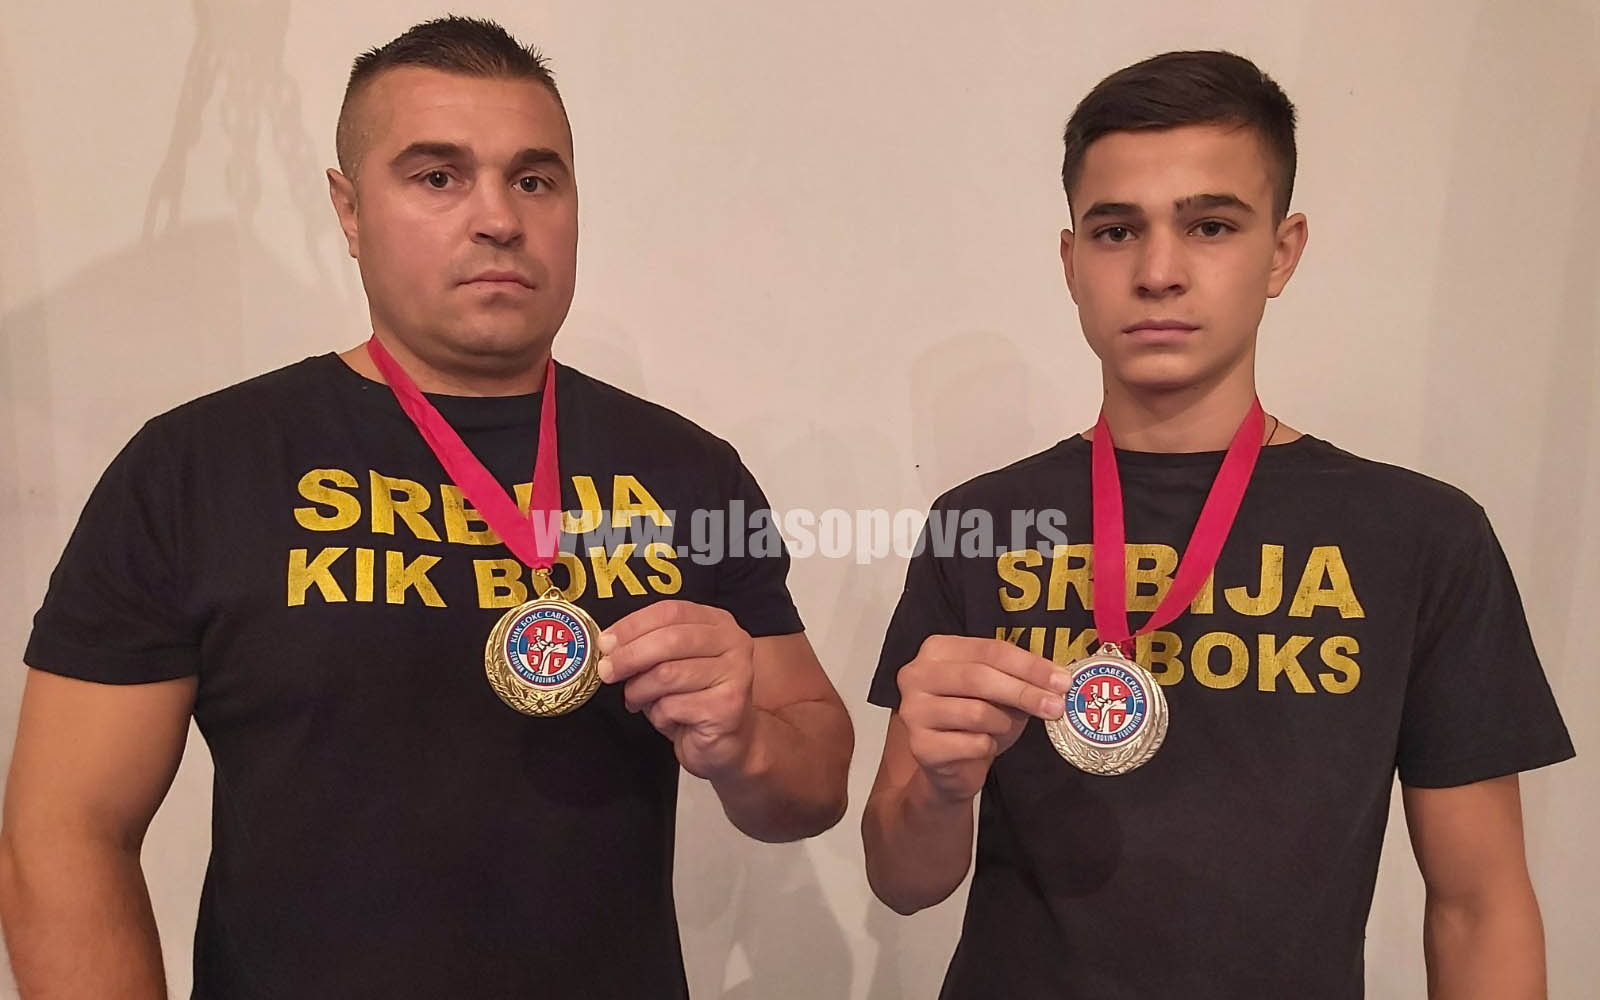 Prvenstvo Srbije u kik boksu: STANKOV ŠAMPION, JANJIĆ VICEŠAMPION